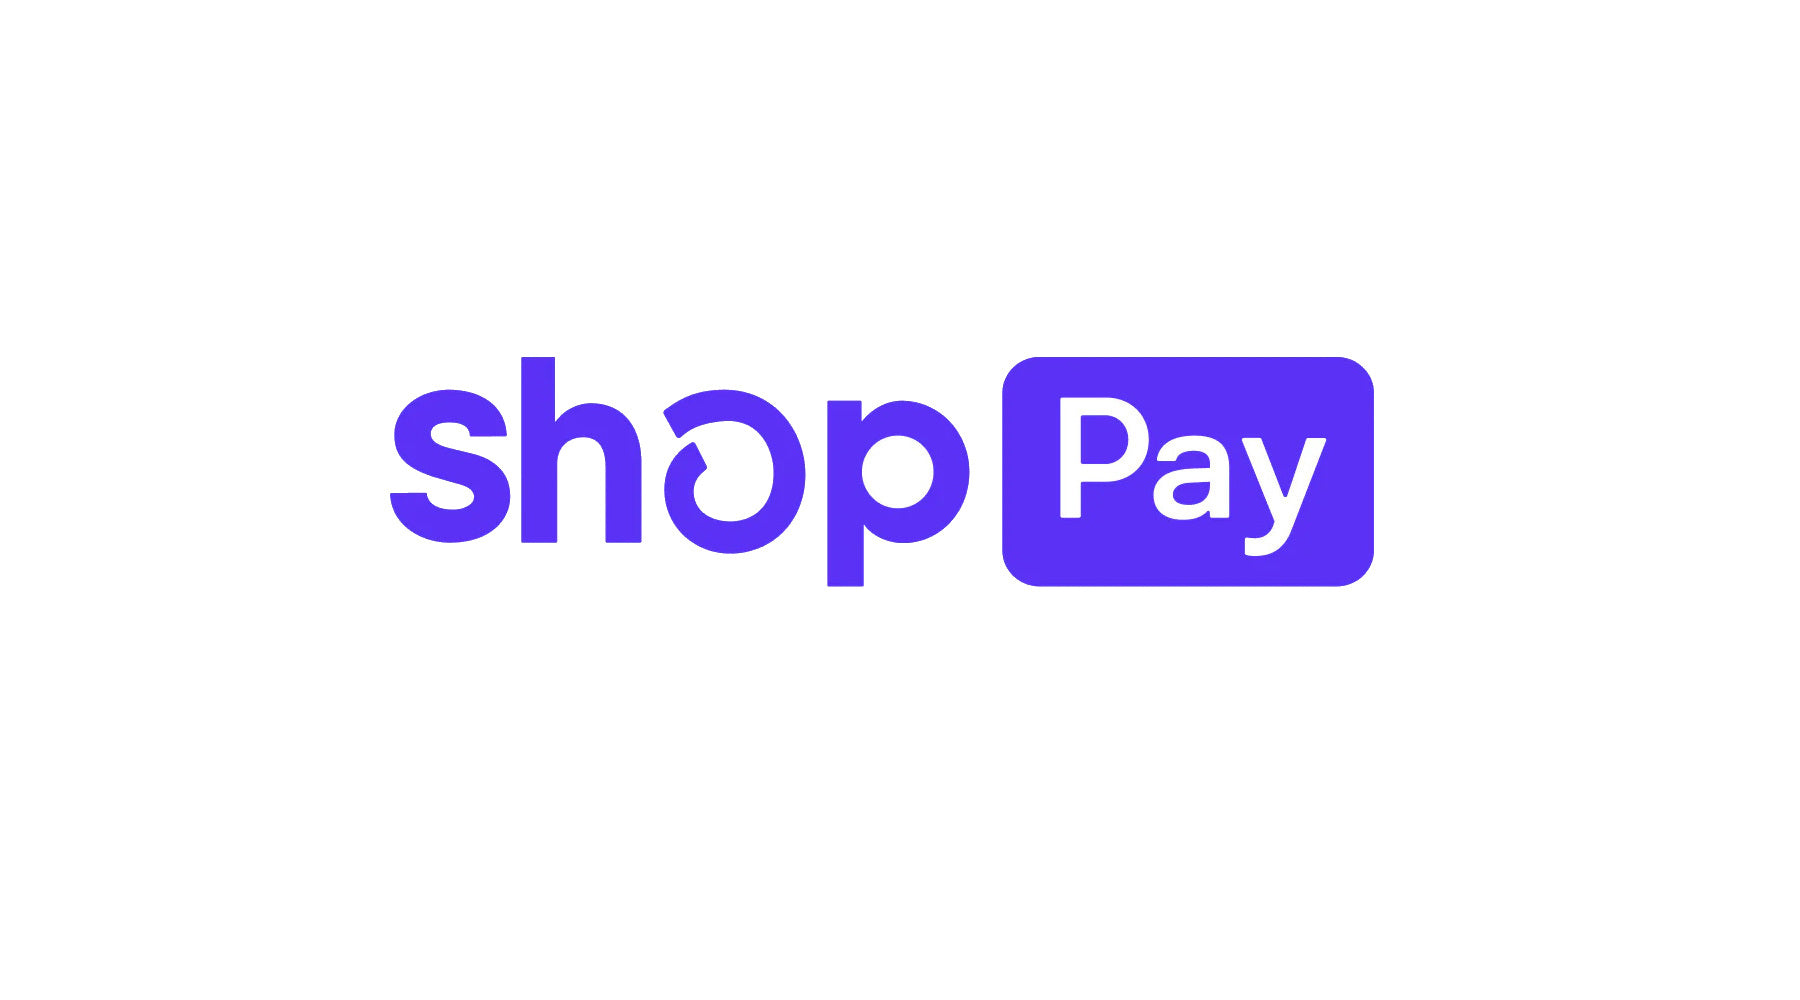 Shopify Shop Pay